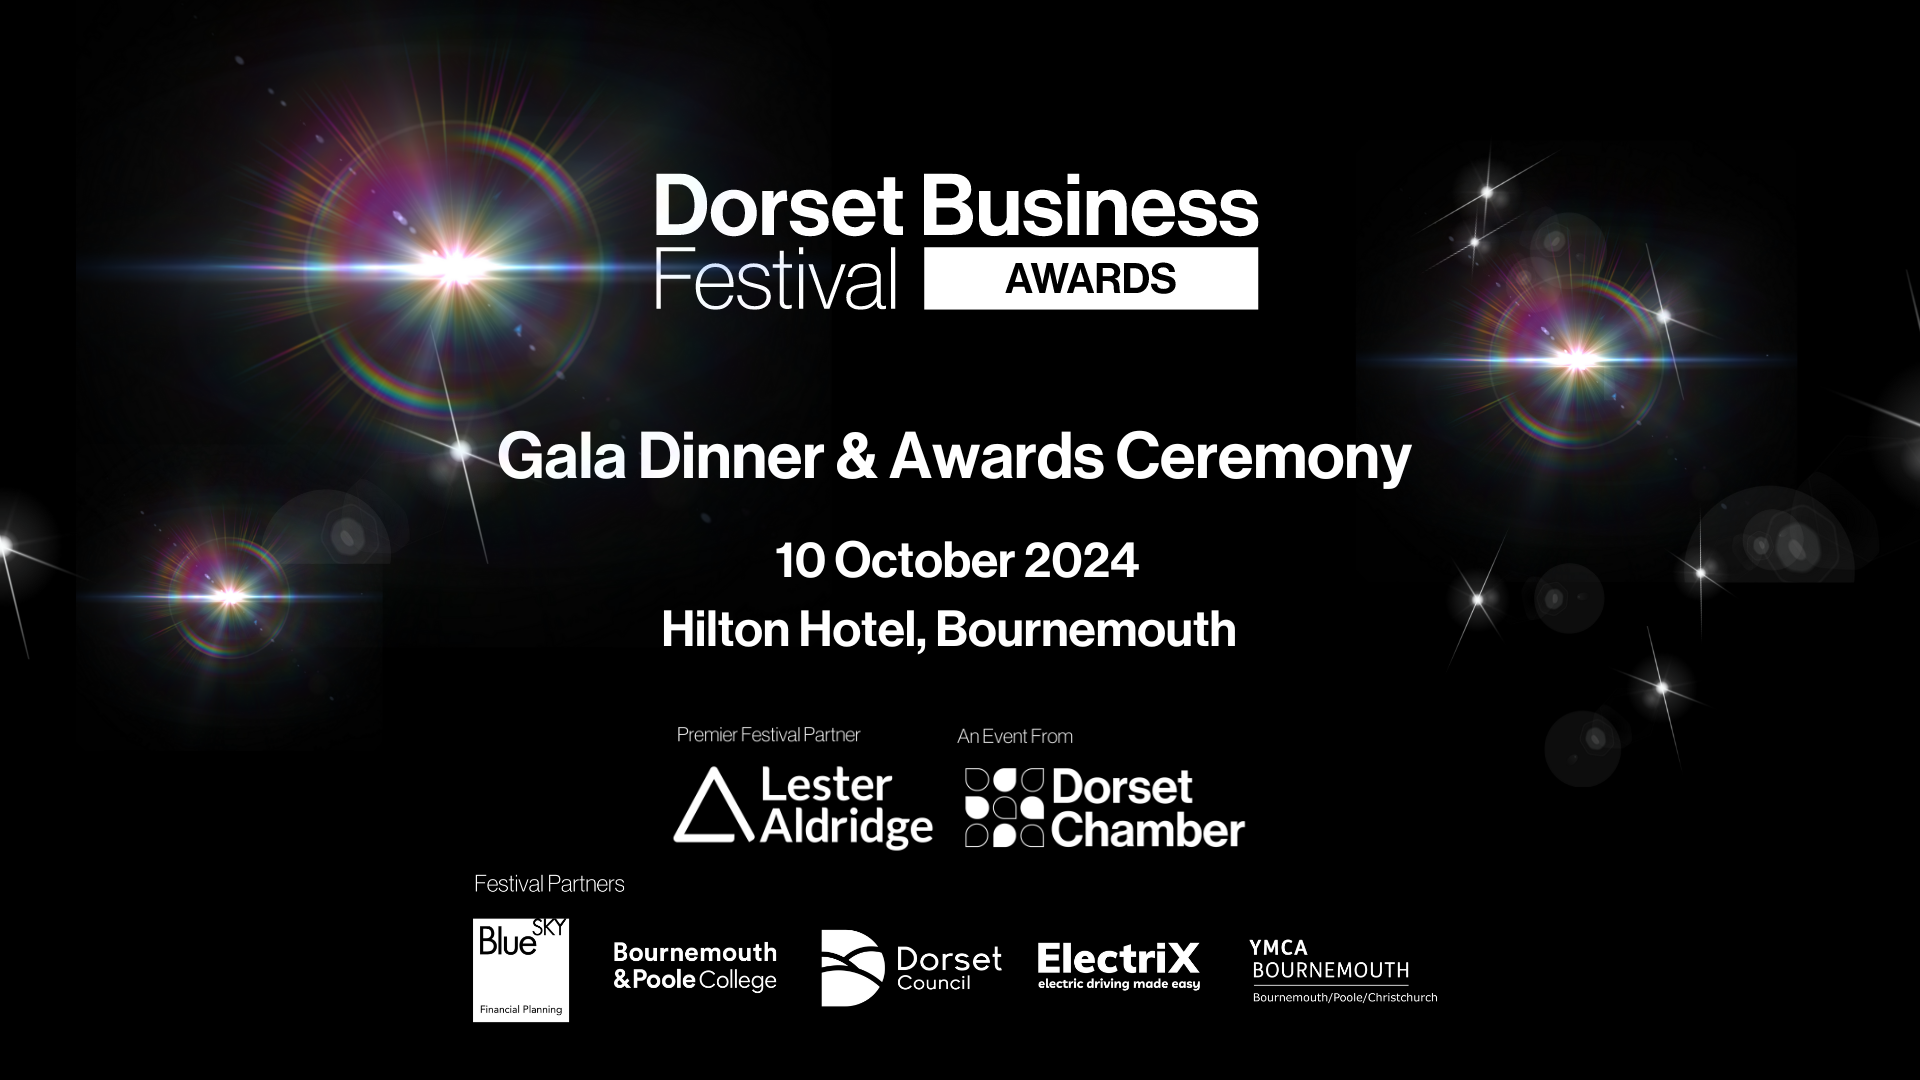 Dorset Business Awards 2024